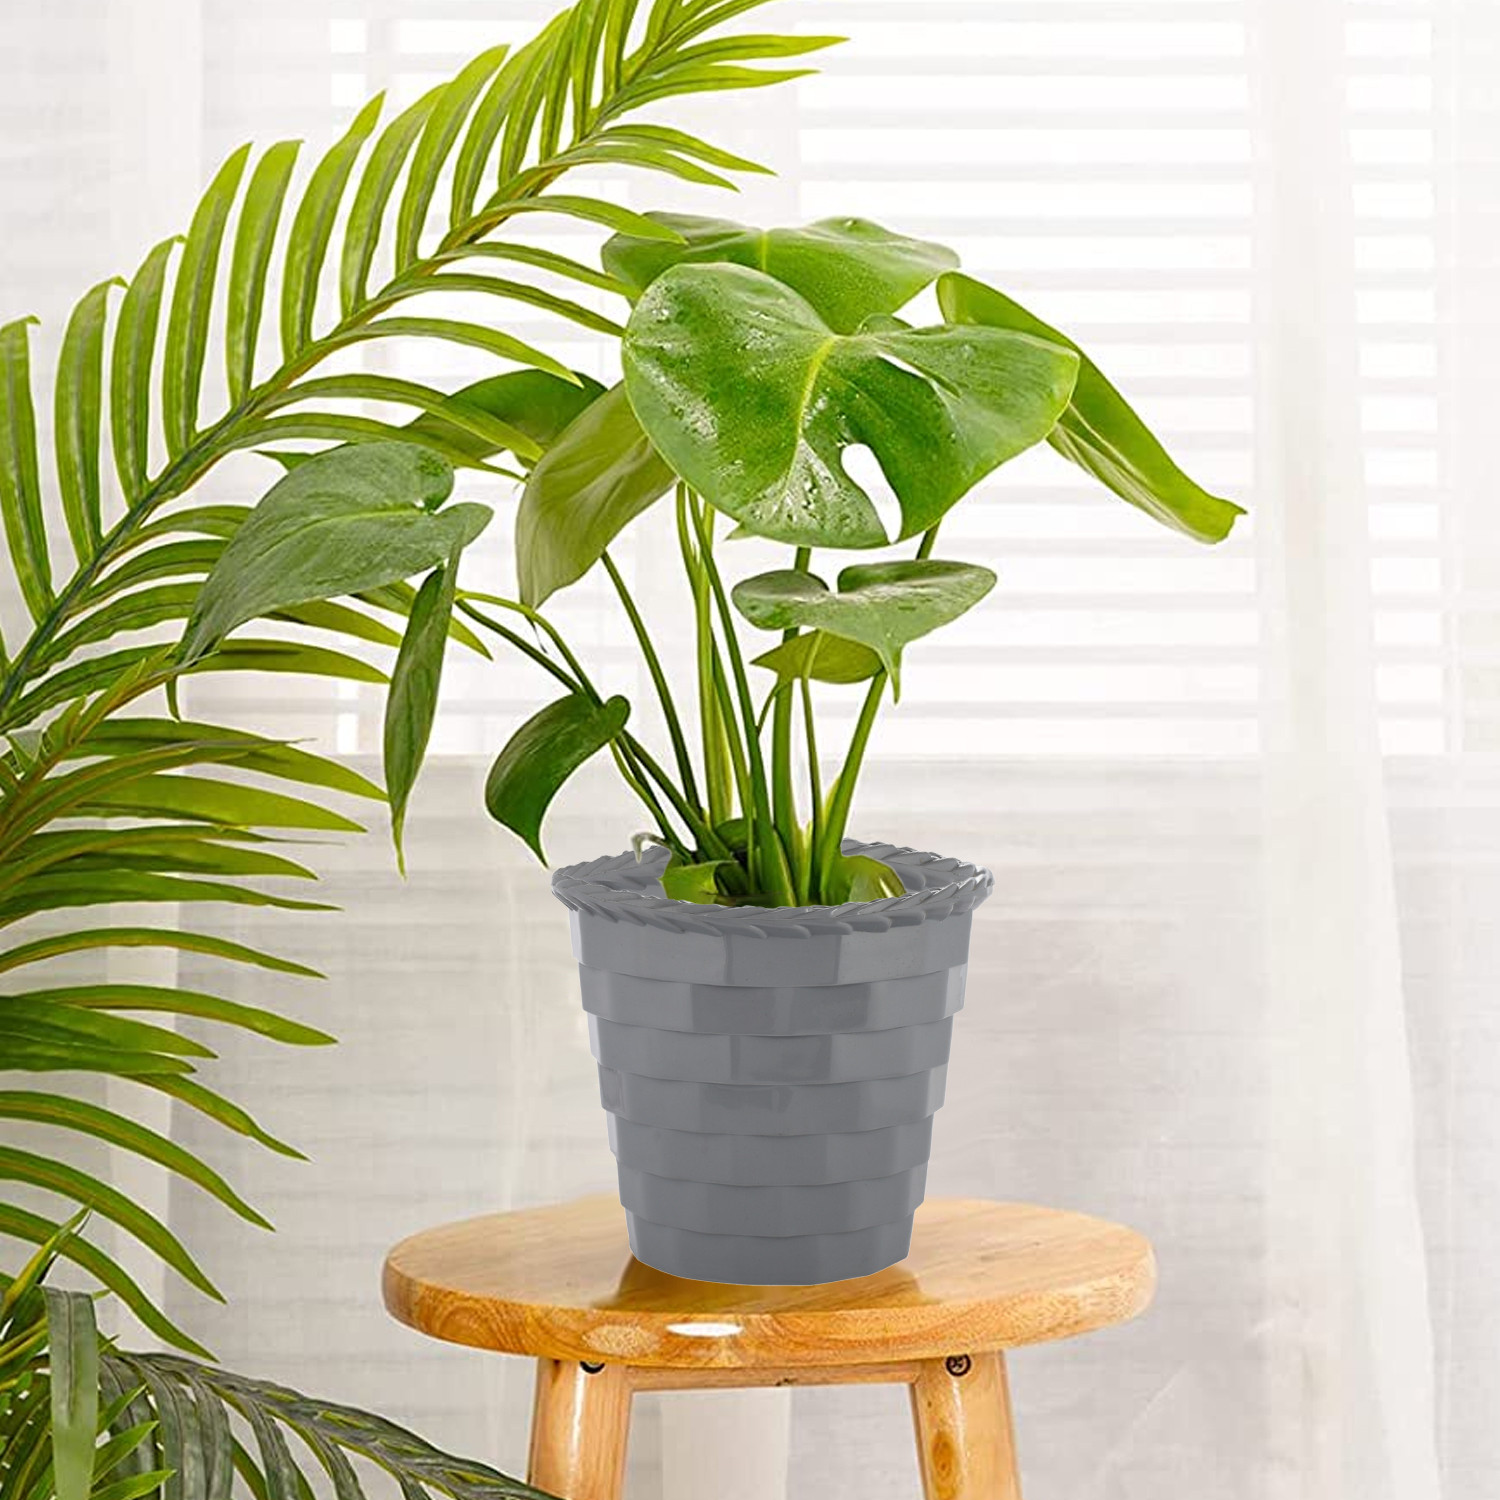 Kuber Industries Brick Flower Pot|Durable Plastic Flower Pots|Planters for Home Décor|Garden|Living Room|Balcony|8 Inch|Pack of 4 (Multicolor)